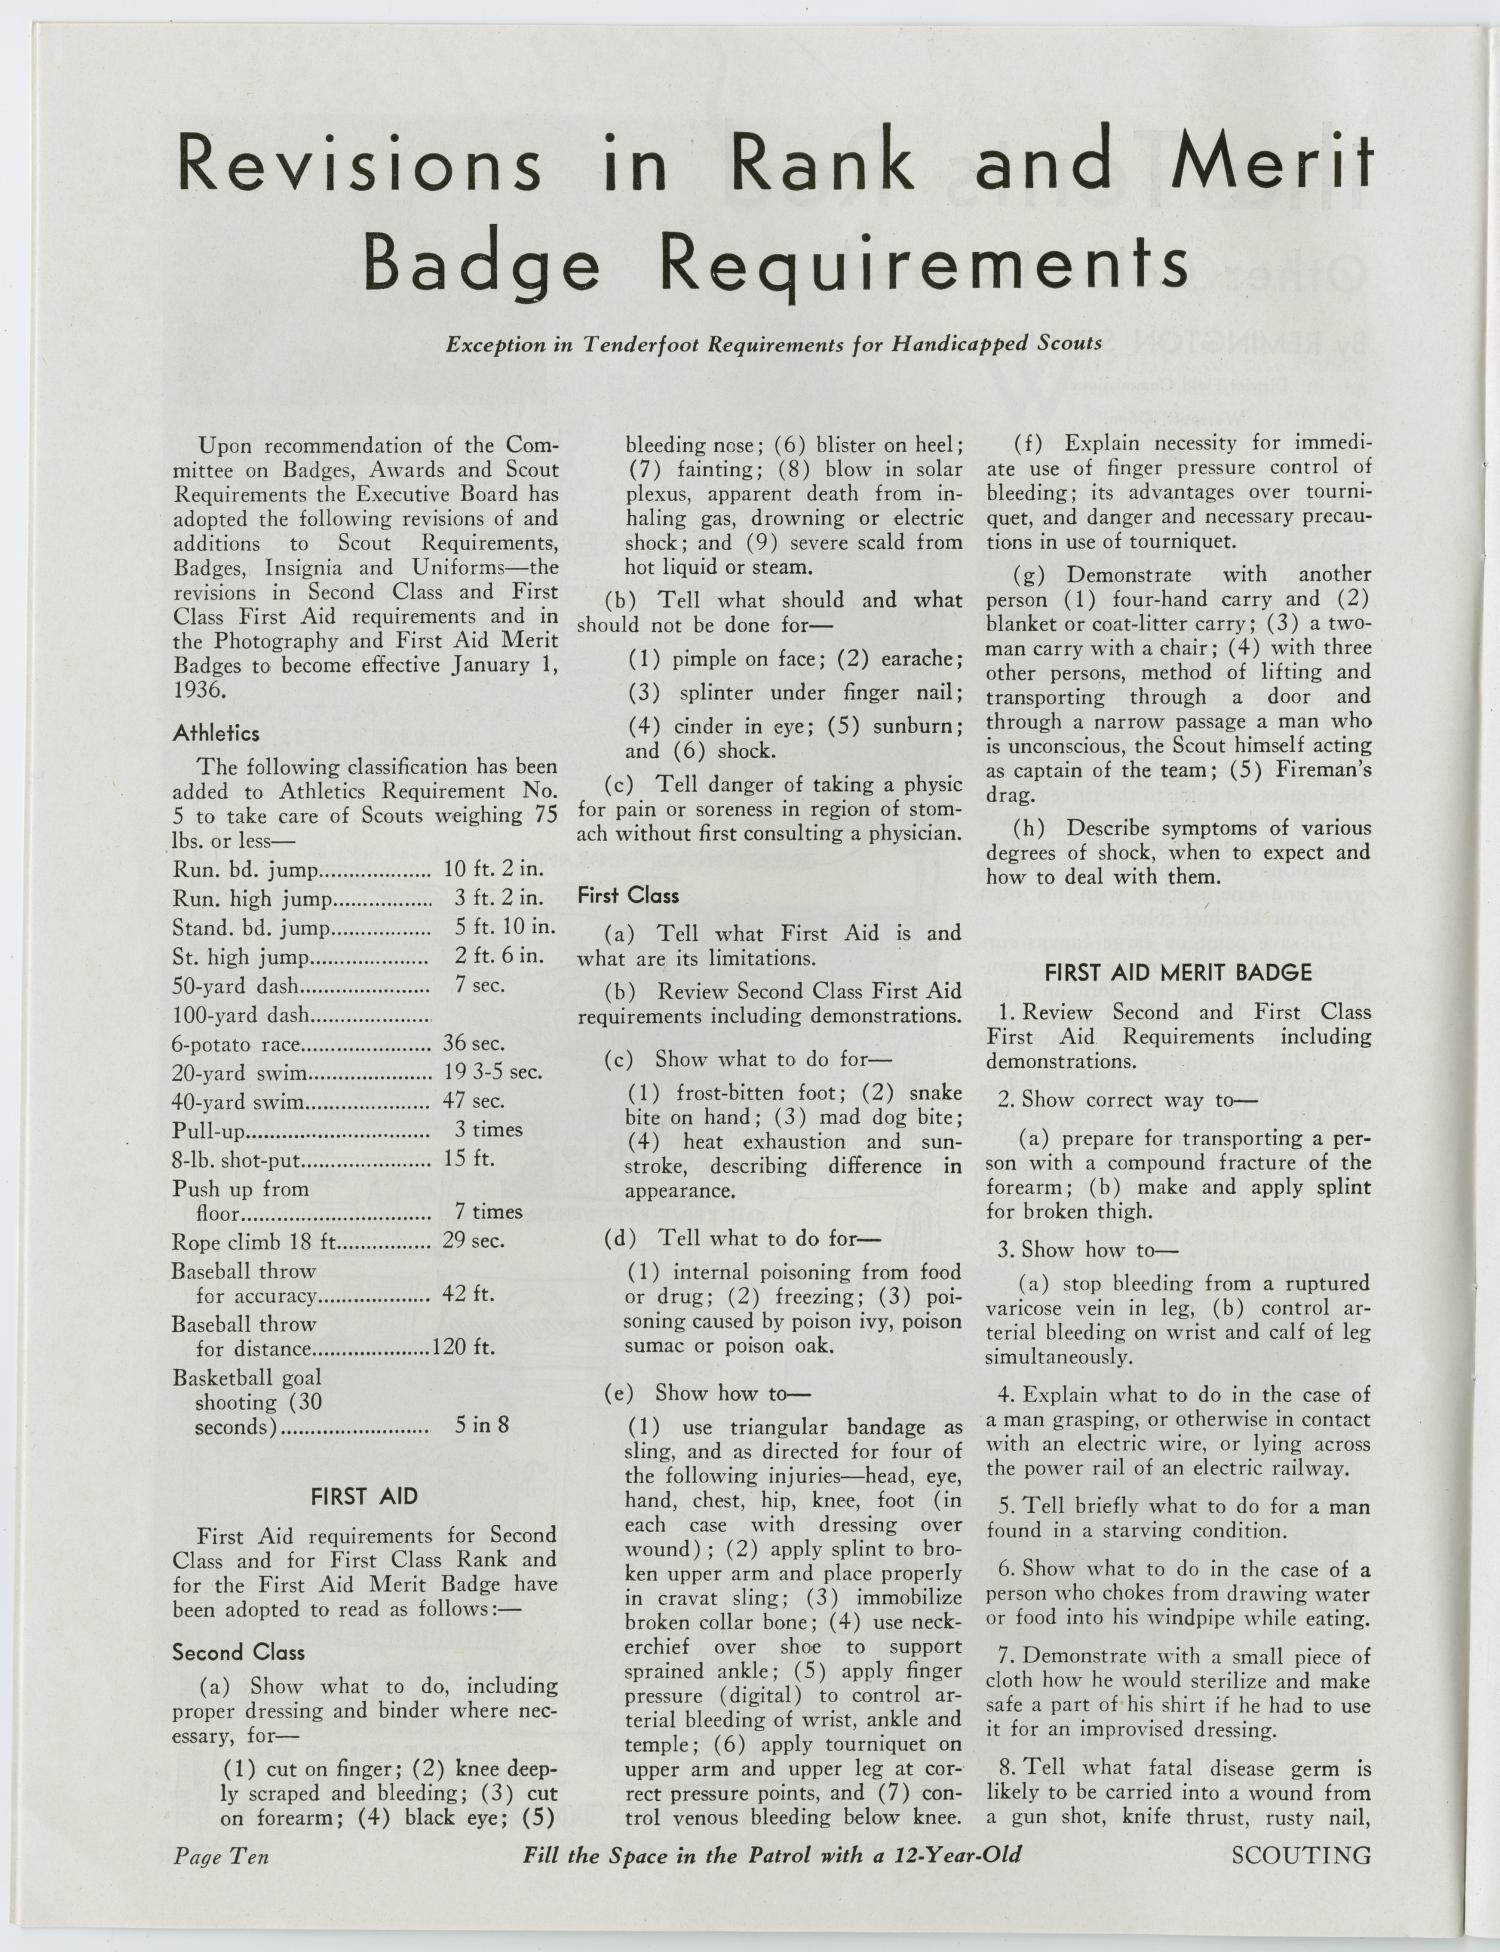 Scouting, Volume 23, Number 6, June 1935
                                                
                                                    10
                                                